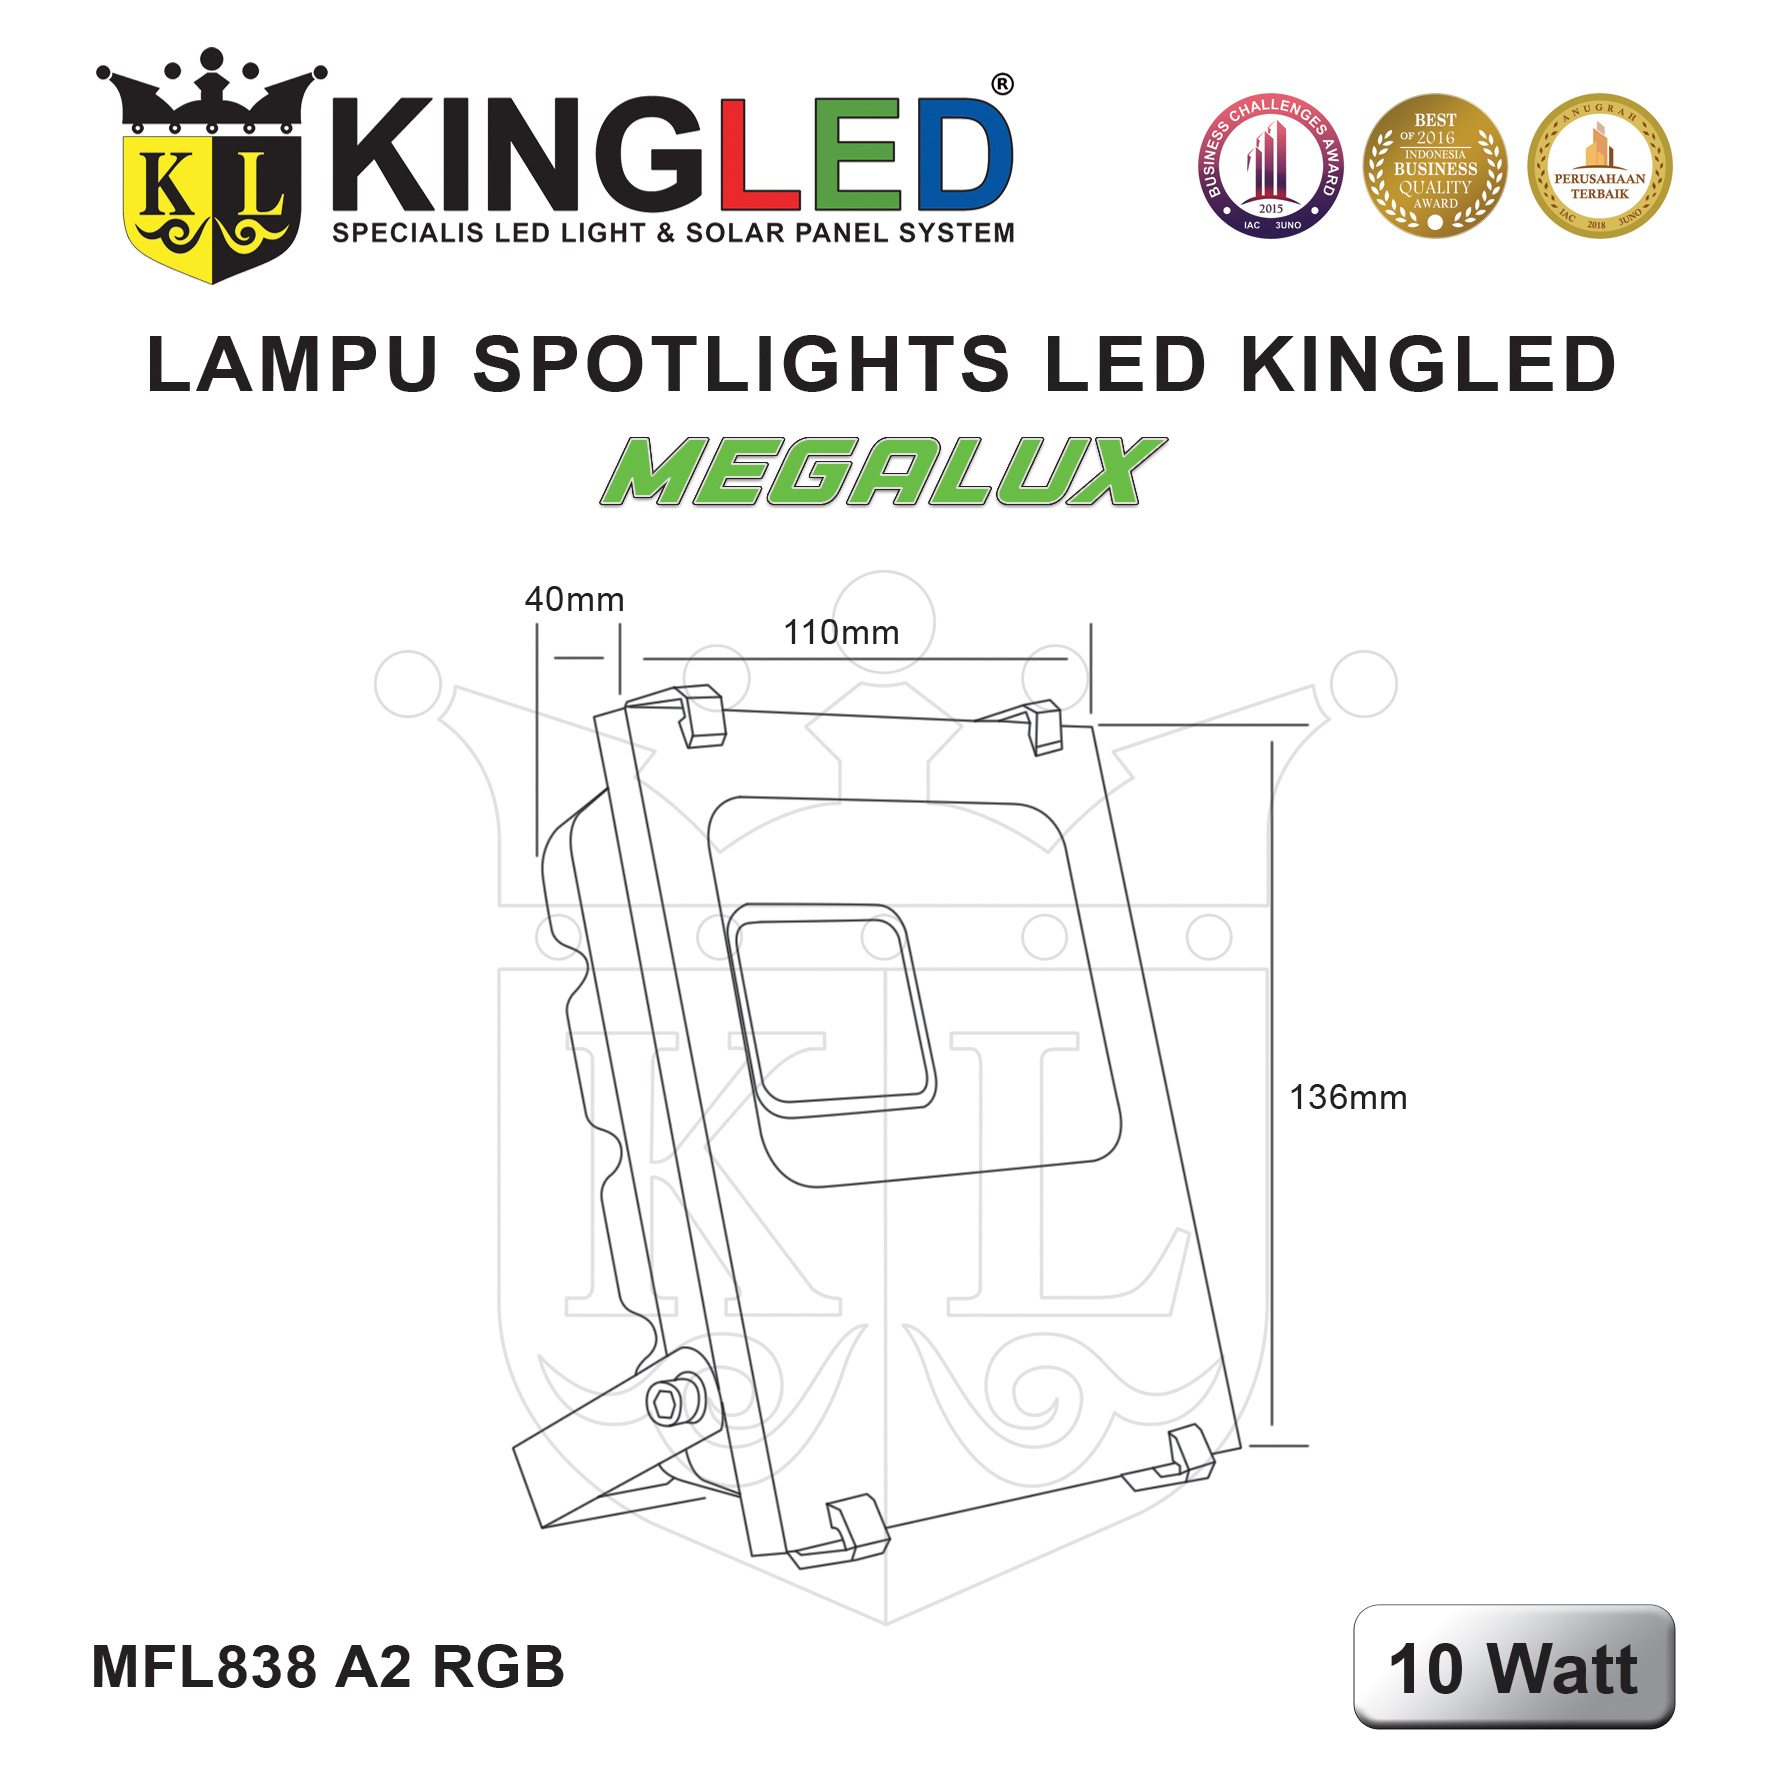 Megalux Lampu Sorot LED 10 Watt / Megalux LED Floodlight 10 Watt